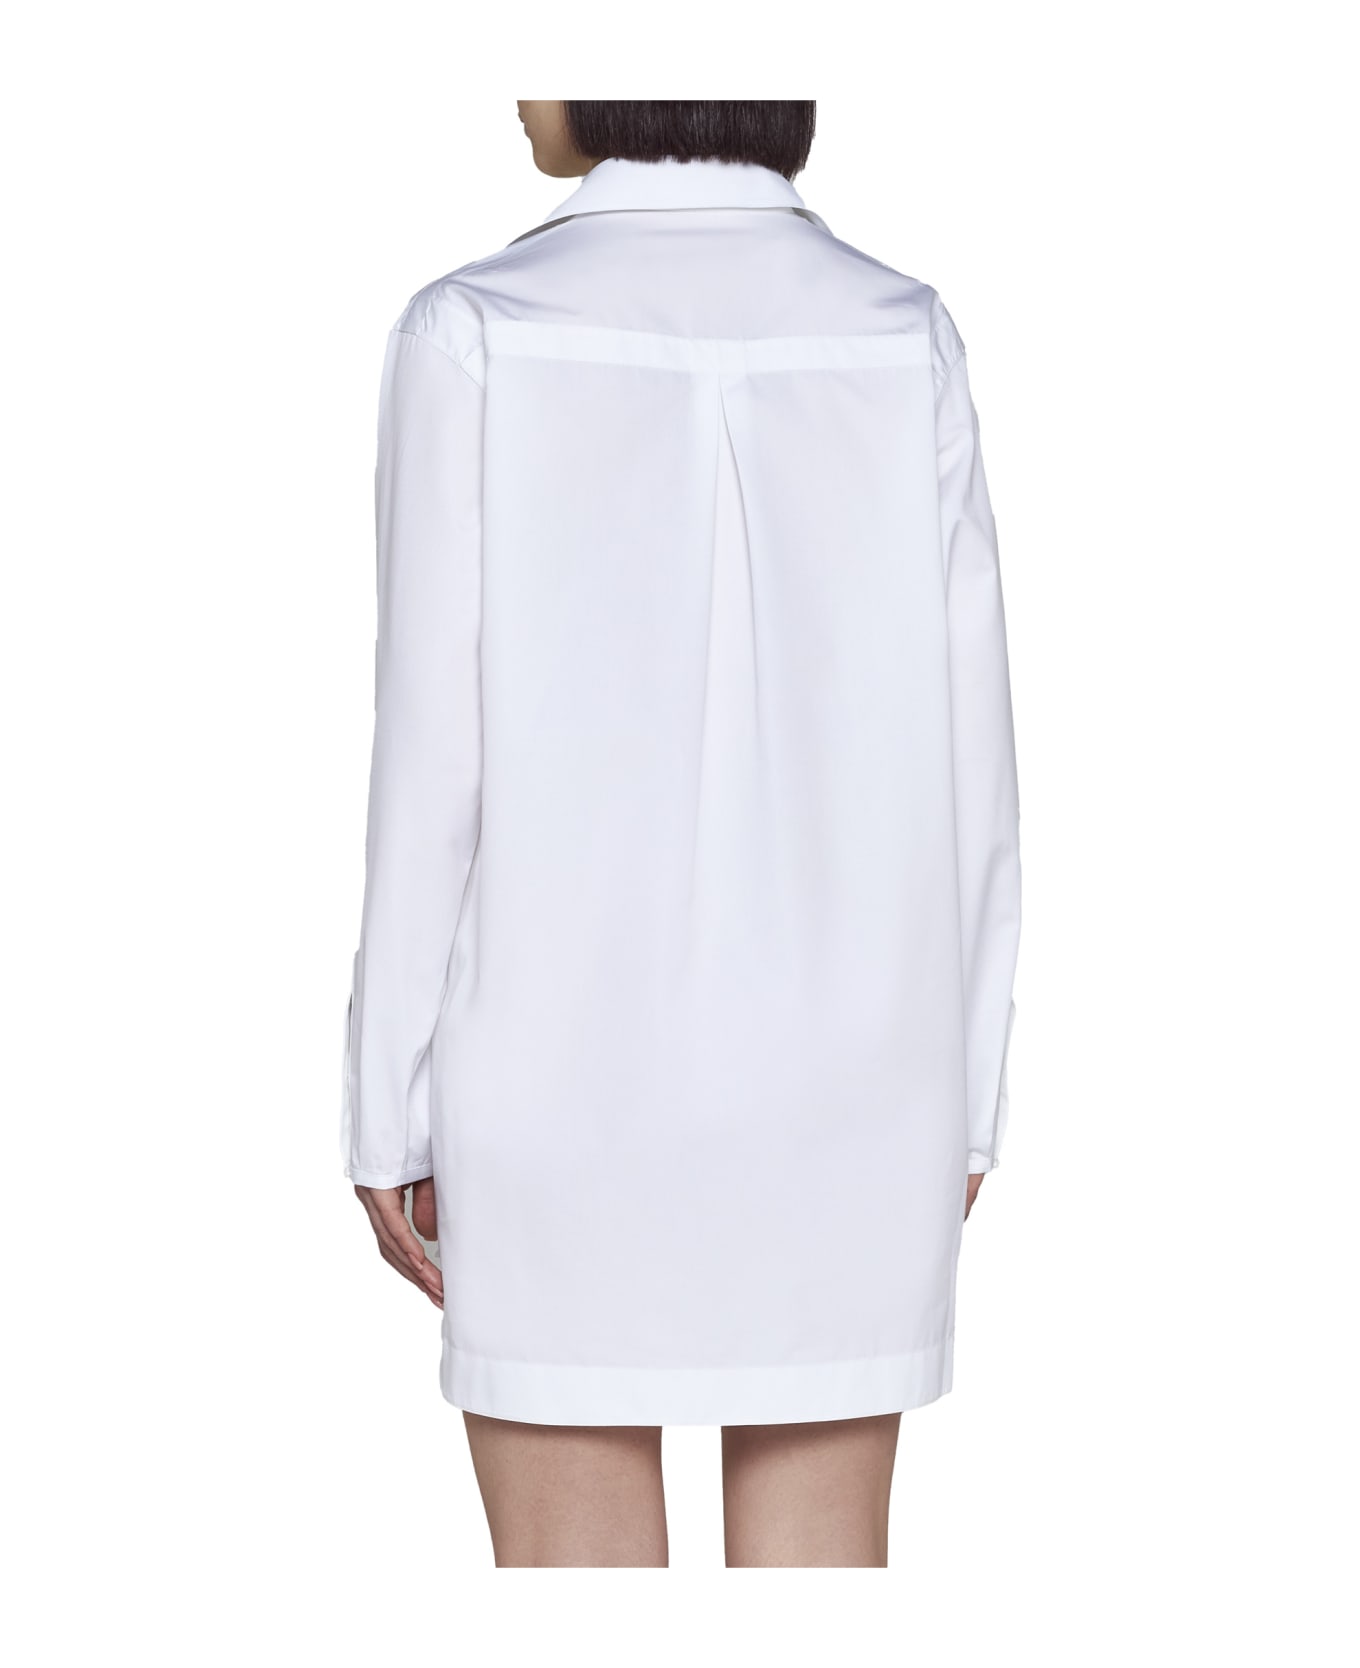 Alaia Shirt - White ブラウス